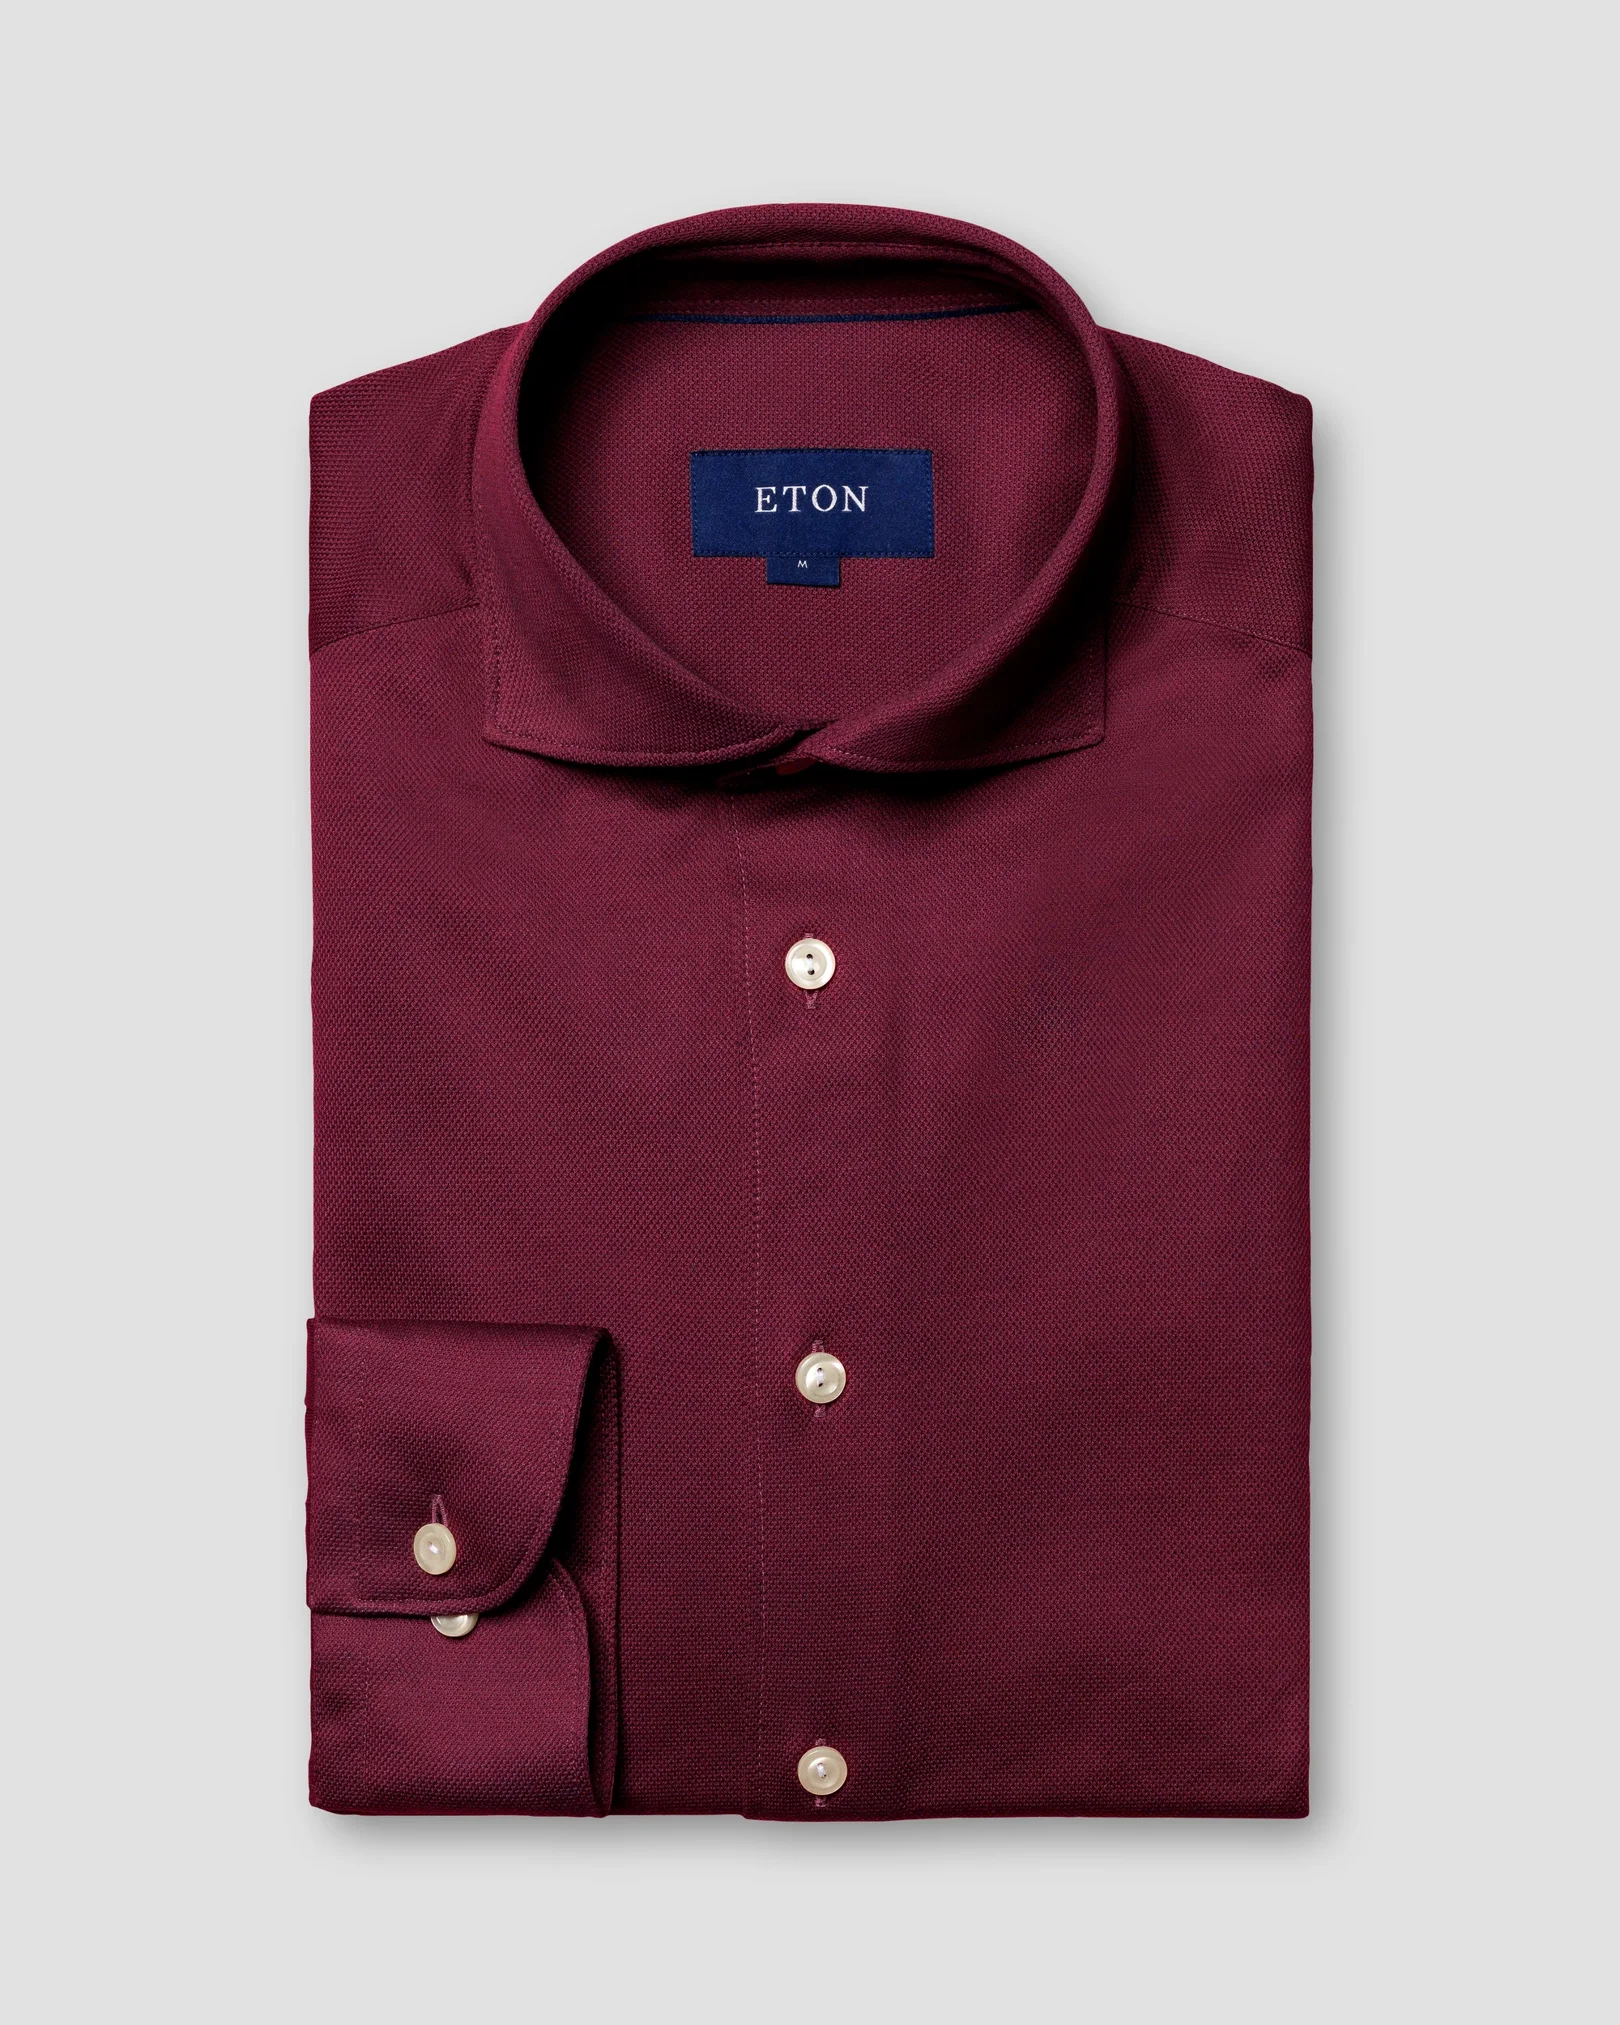 Eton - burgundy pique shirt